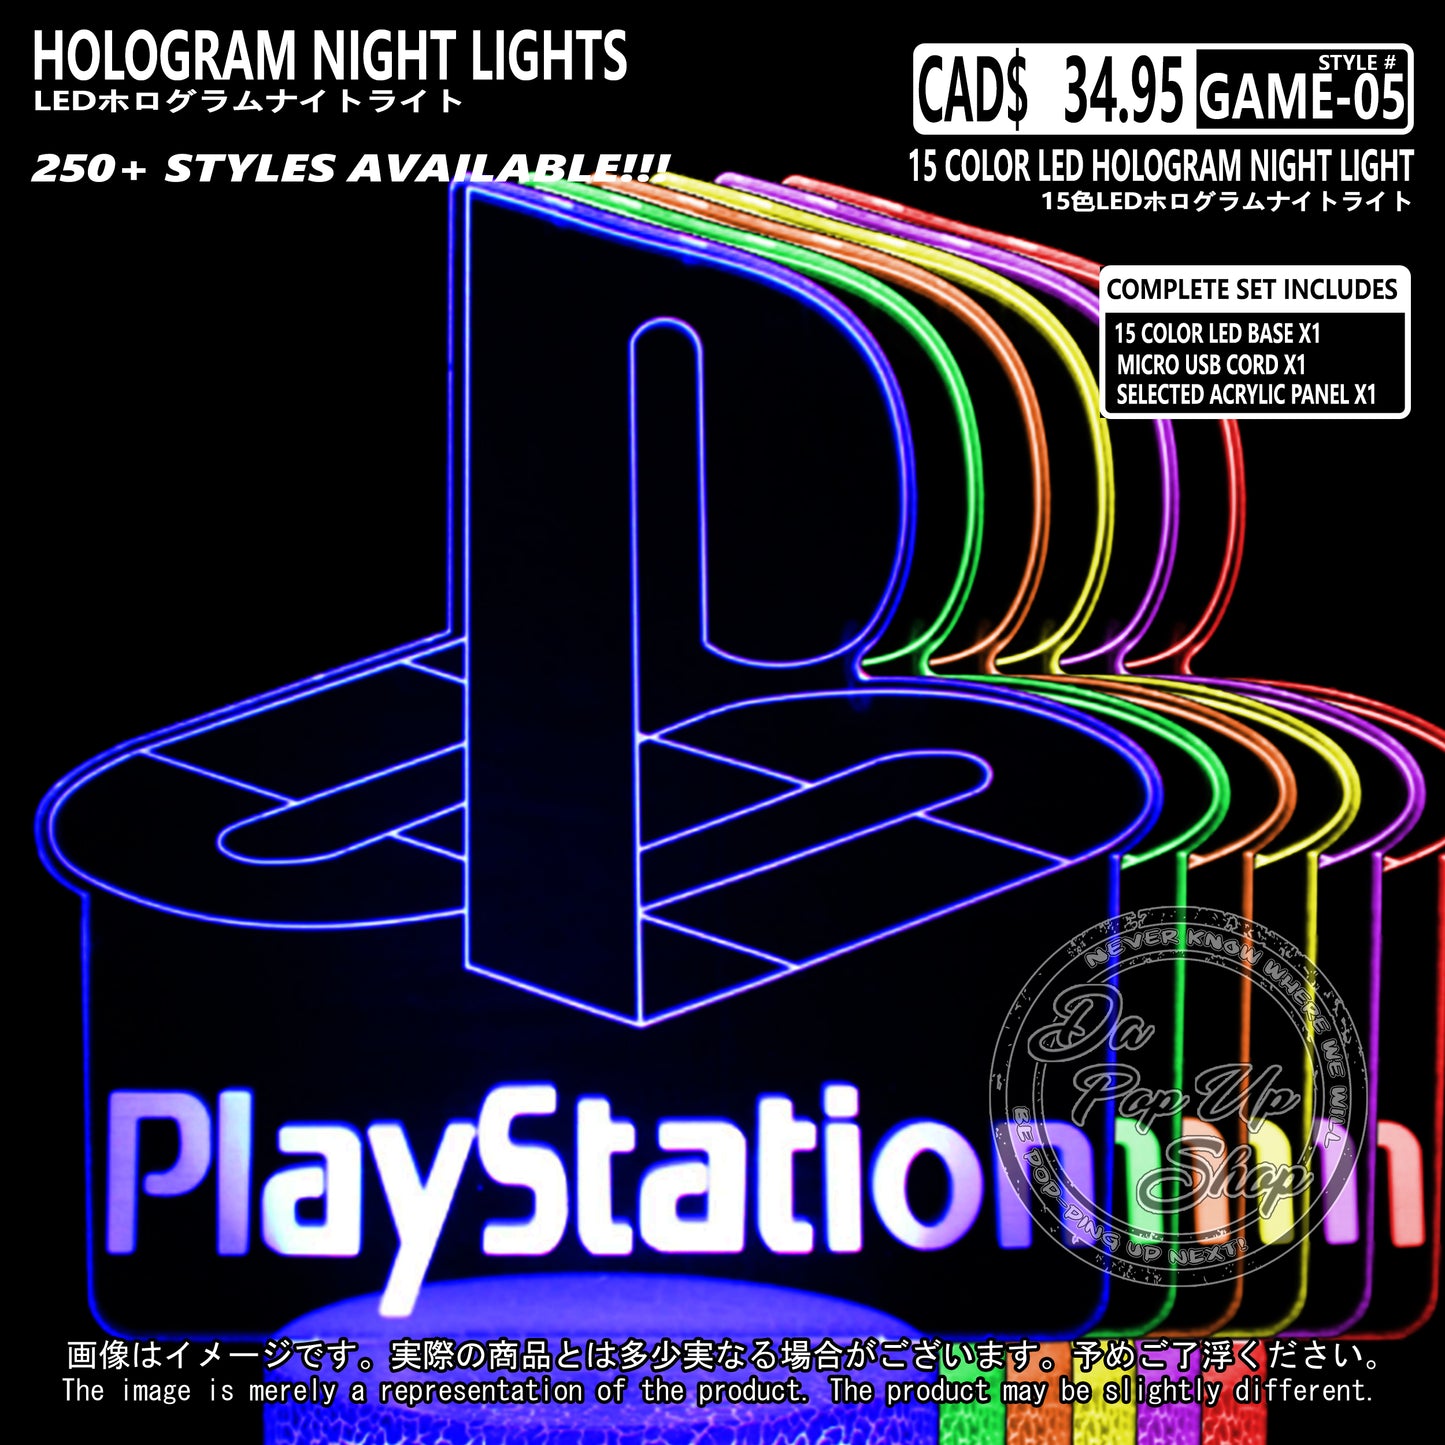 (GAME-05) Sony Playstation Hologram LED Night Light